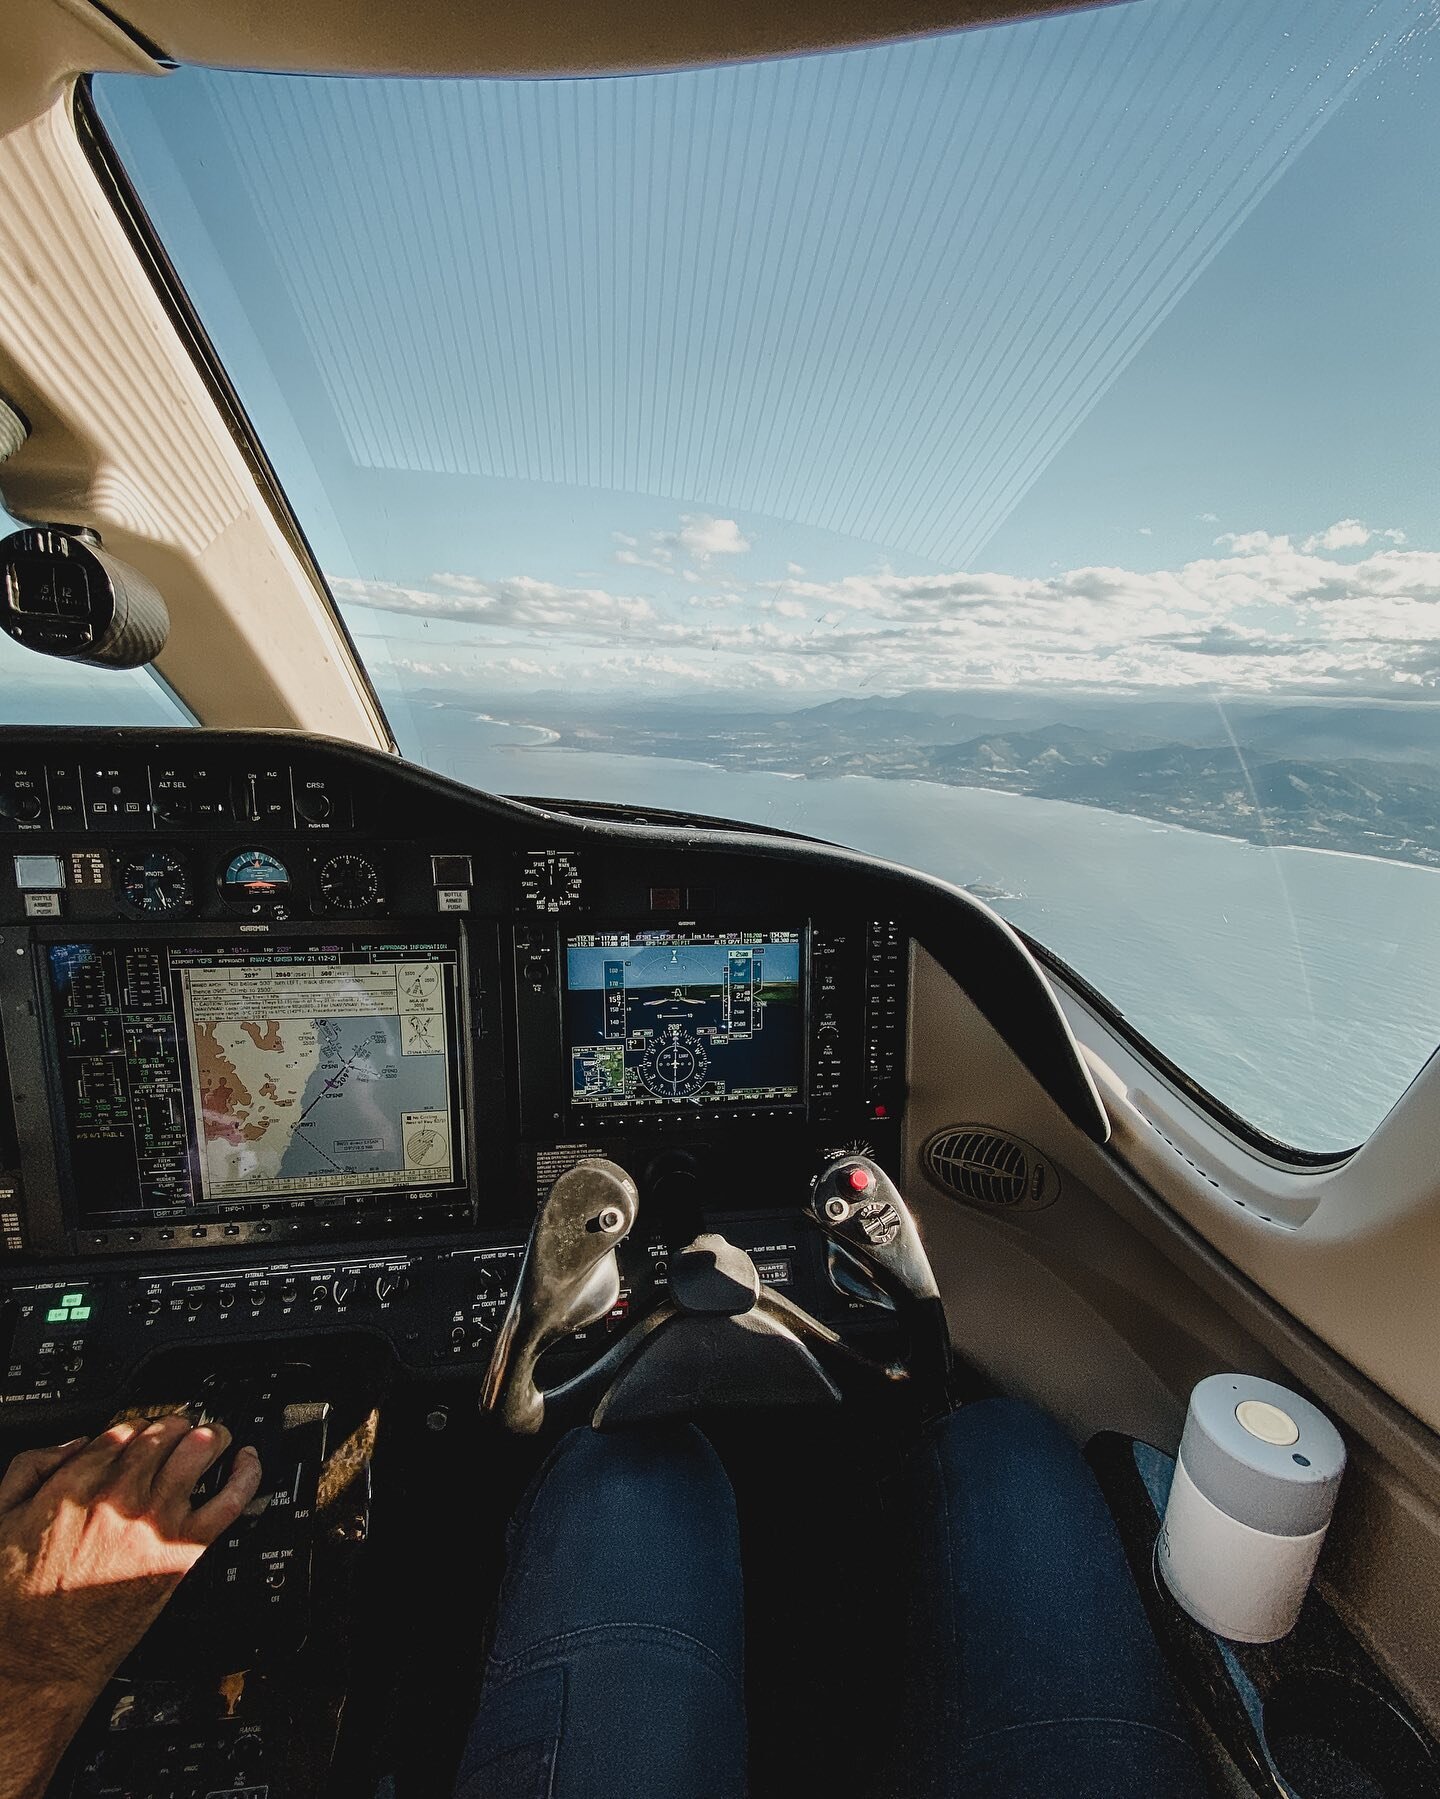 A picture-perfect view in one of our Cessna Citation Mustangs.

#aviation #avgeek #pilotlife #pilot #aircraft #instagramaviation #aviationlovers #airplane #instaaviation #plane #cessna #cessnamustang  #aviationphotography #charter  #charterflight #fl